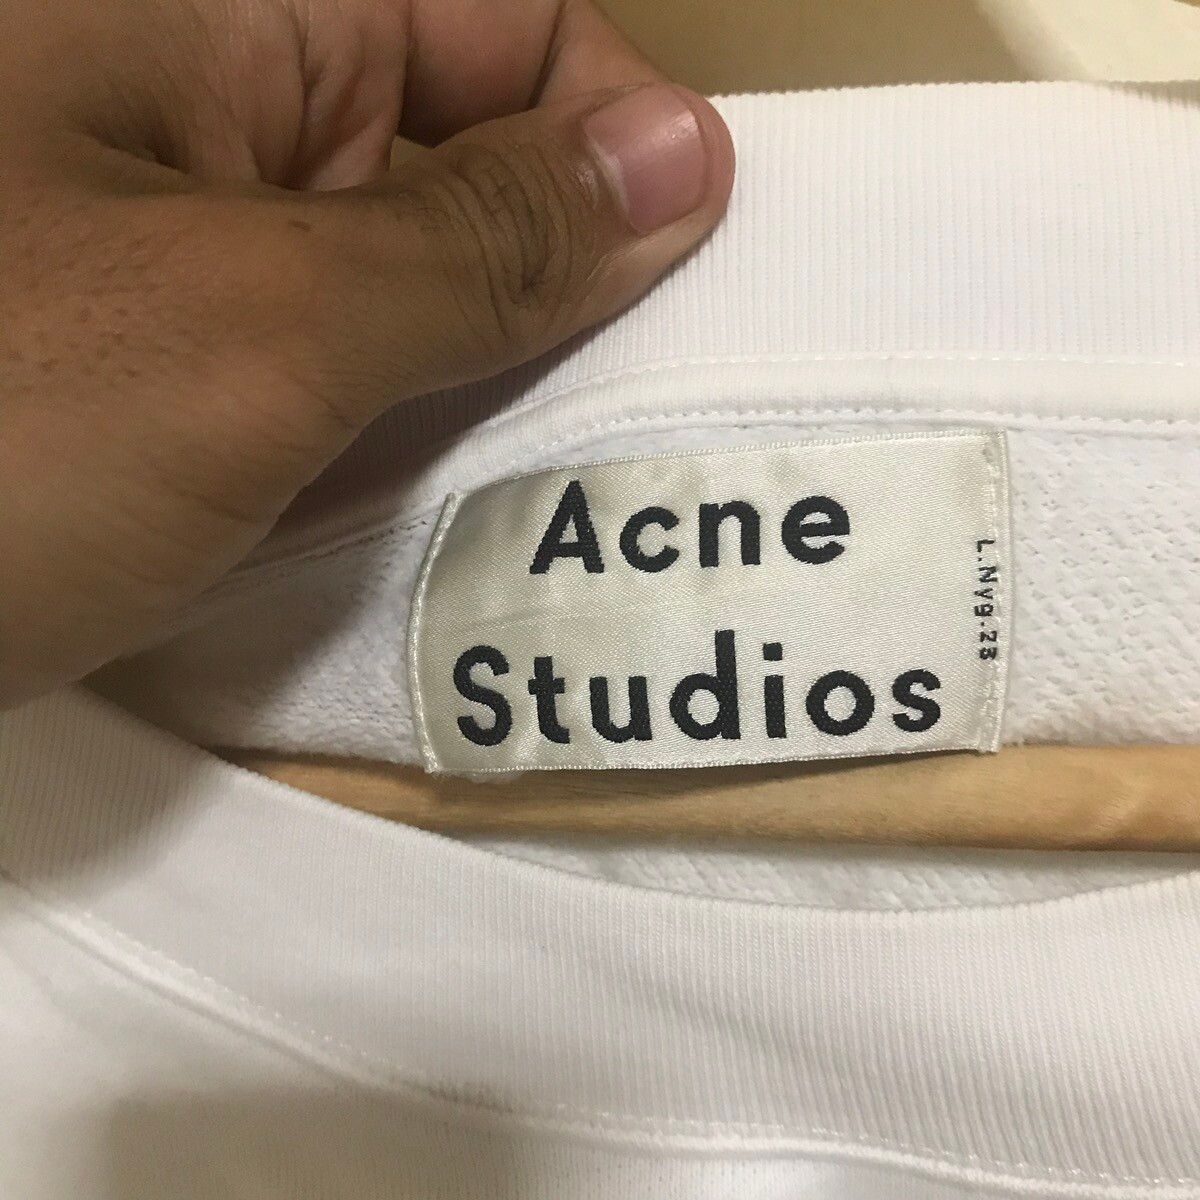 Acne studios crop top sweatshirt zipper raf simons d&g - 2